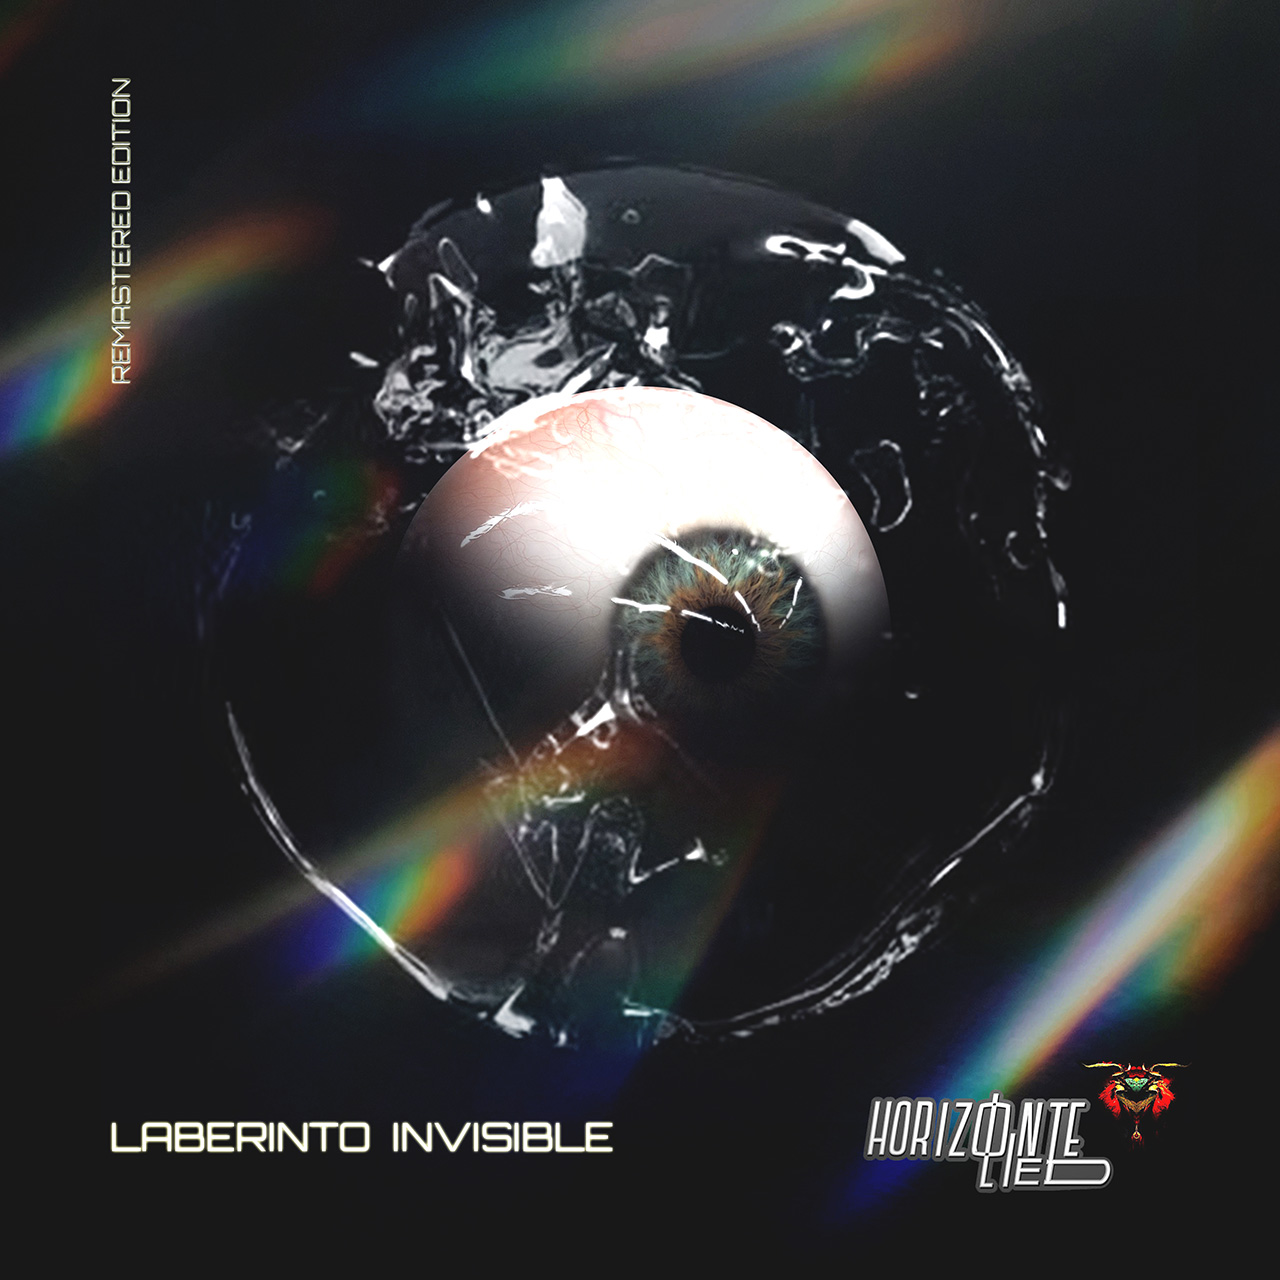 audio/Horizonte Lied/2022/LIMBO-P03 - Laberinto Invisible [Remastered Edition] (Single)/LIMBO-P03 - Horizonte Lied - Laberinto Invisible [Remastered Edition] (Single).jpg